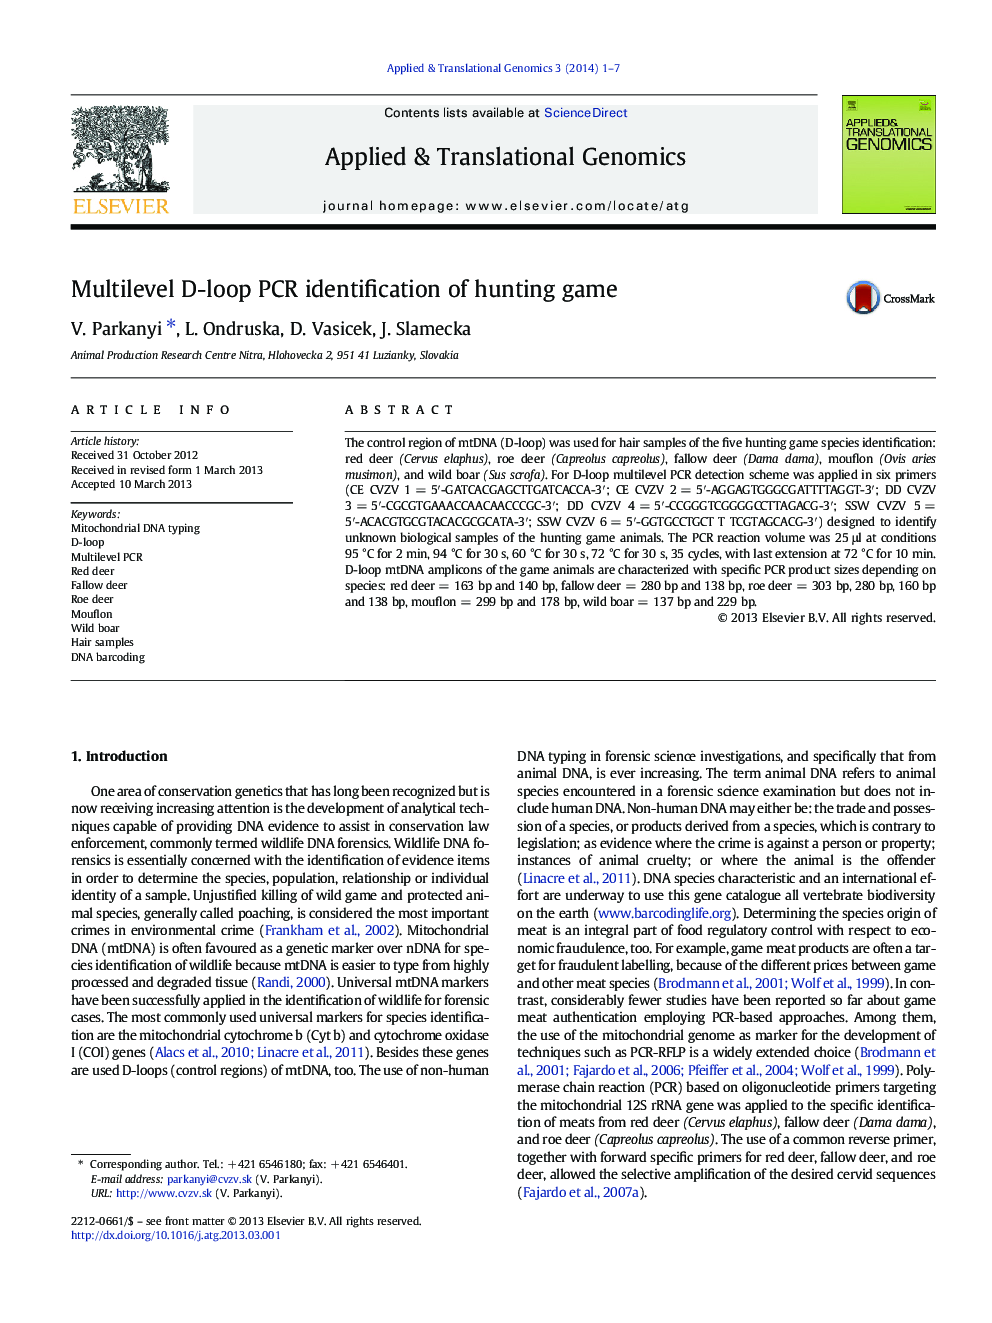 Multilevel D-loop PCR identification of hunting game